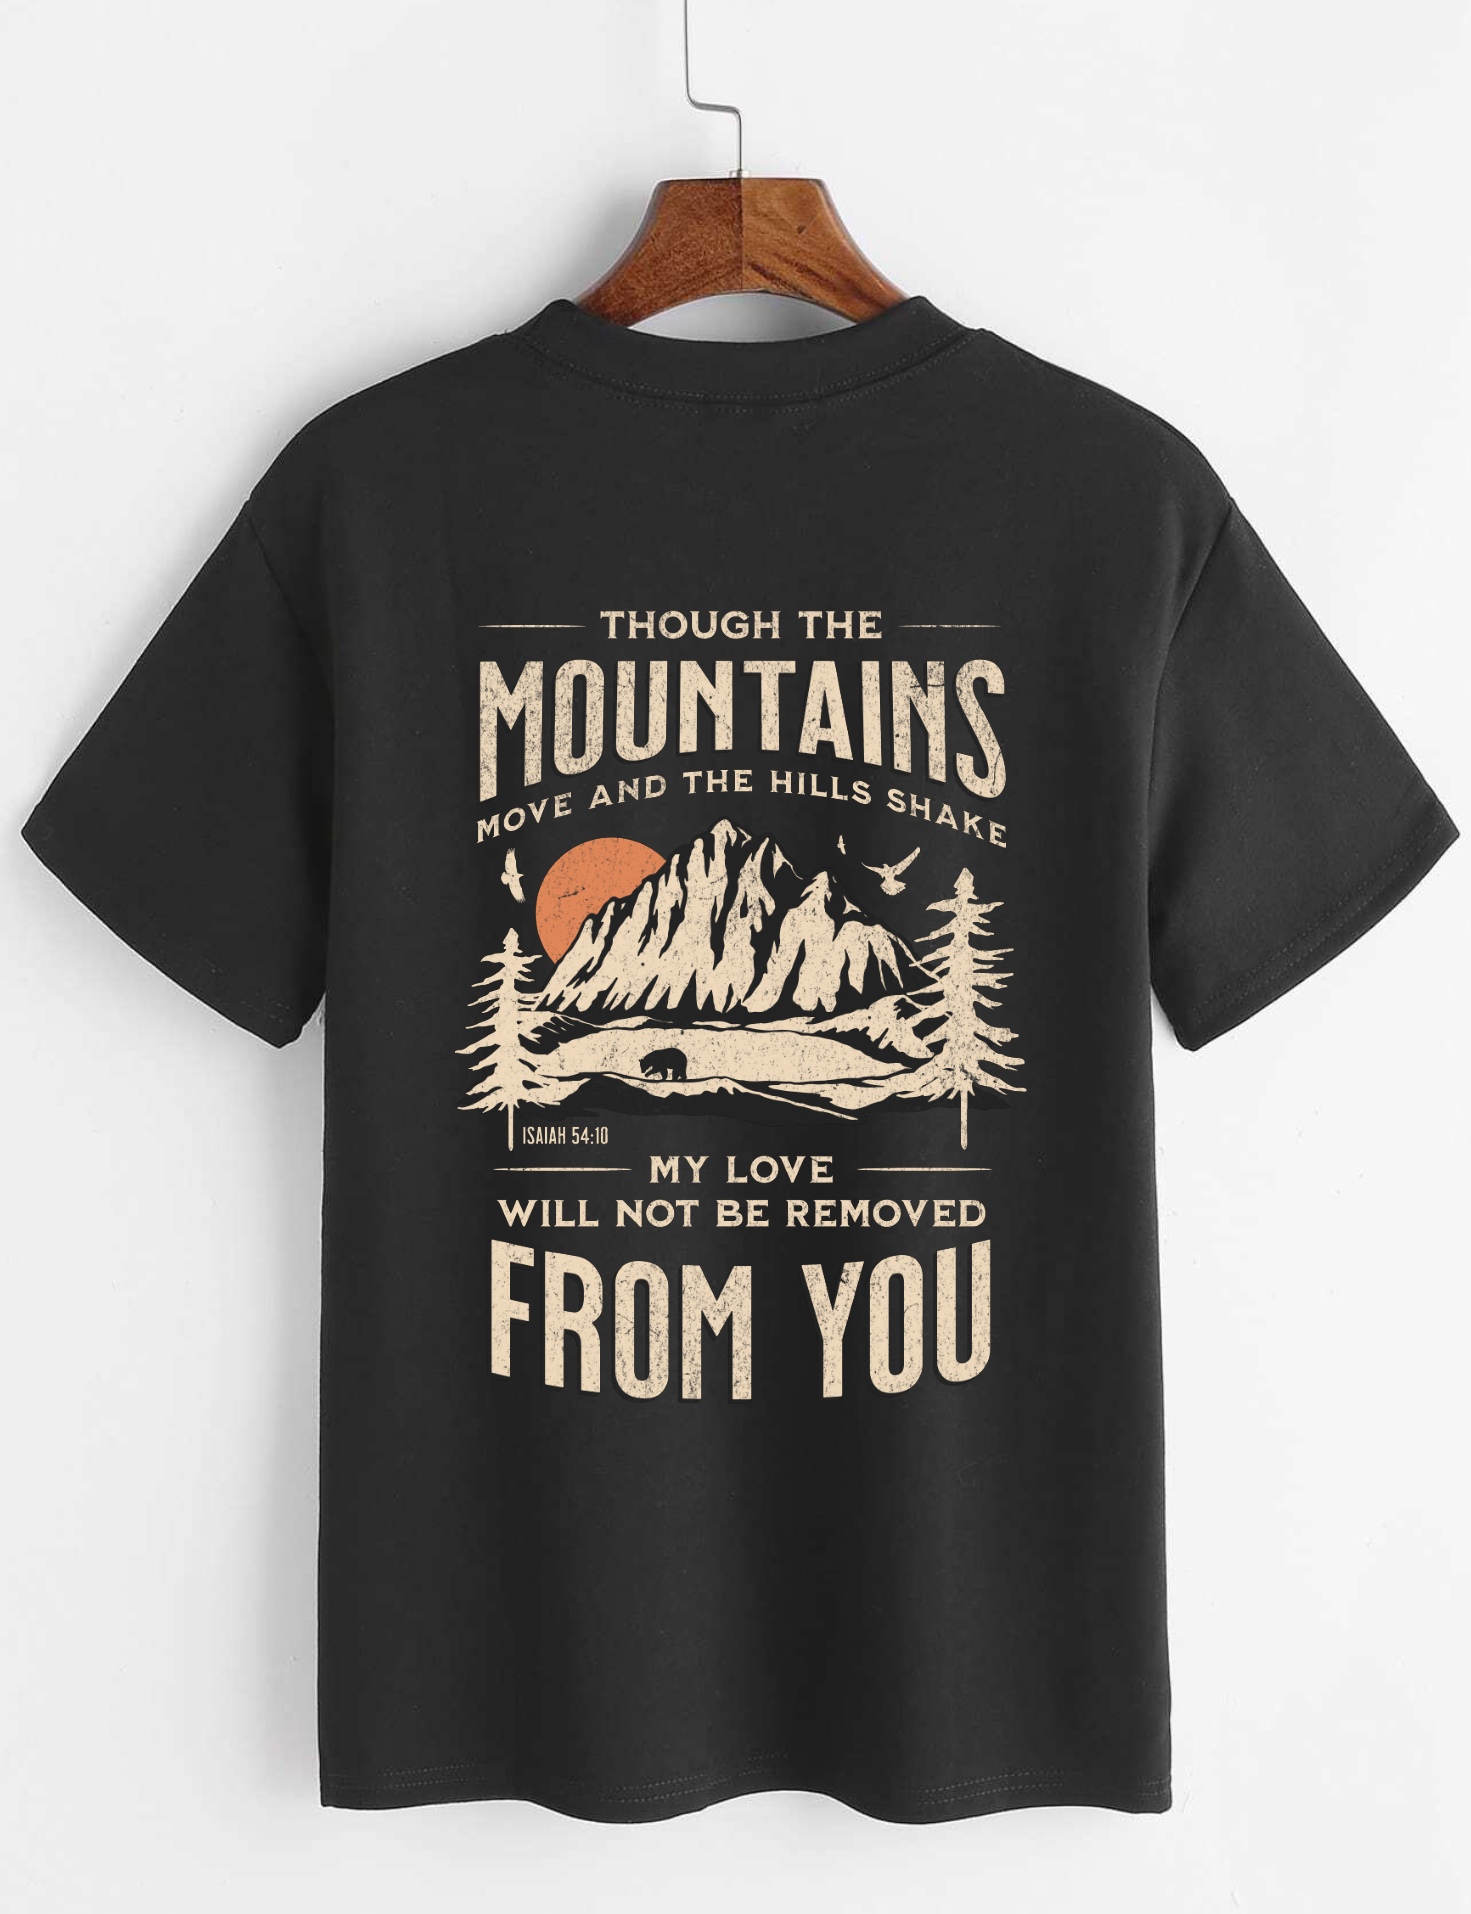 Though The Mountains - Men's Christian T-Shirt